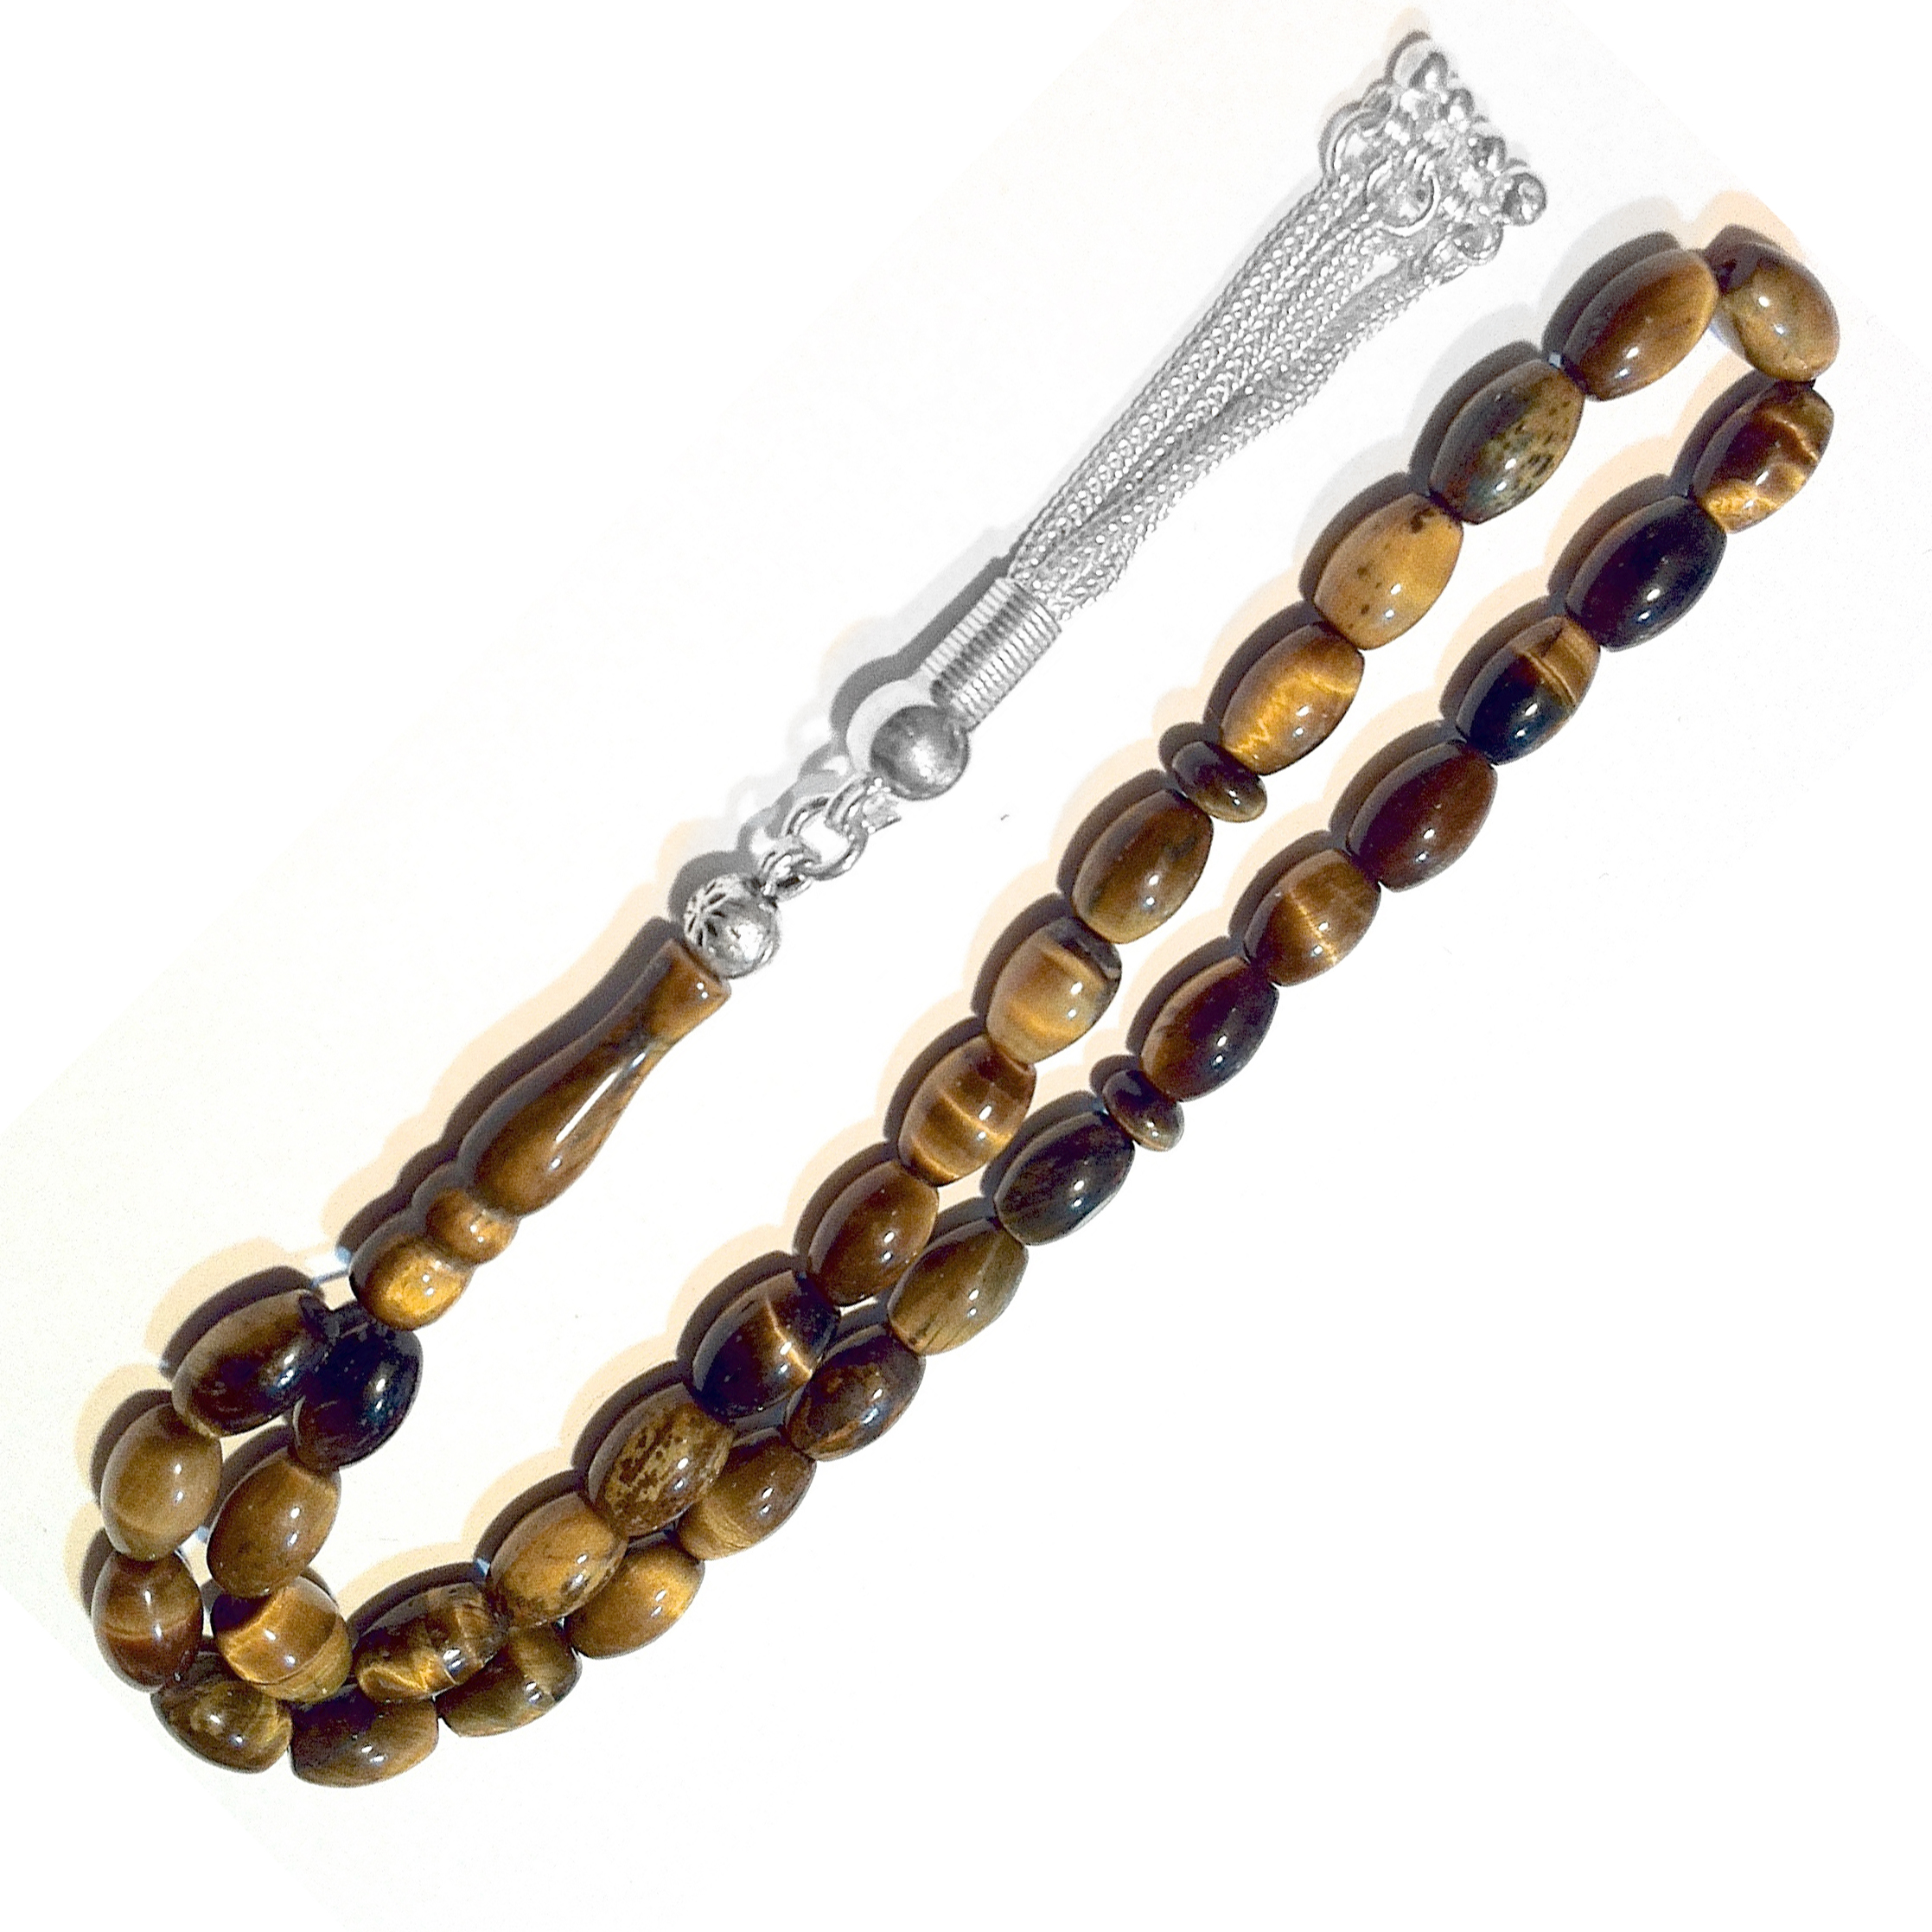 Islamic Prayer Beads Tasbih Tiger Eye 9 mm w/silver ID # 6679 - Click Image to Close